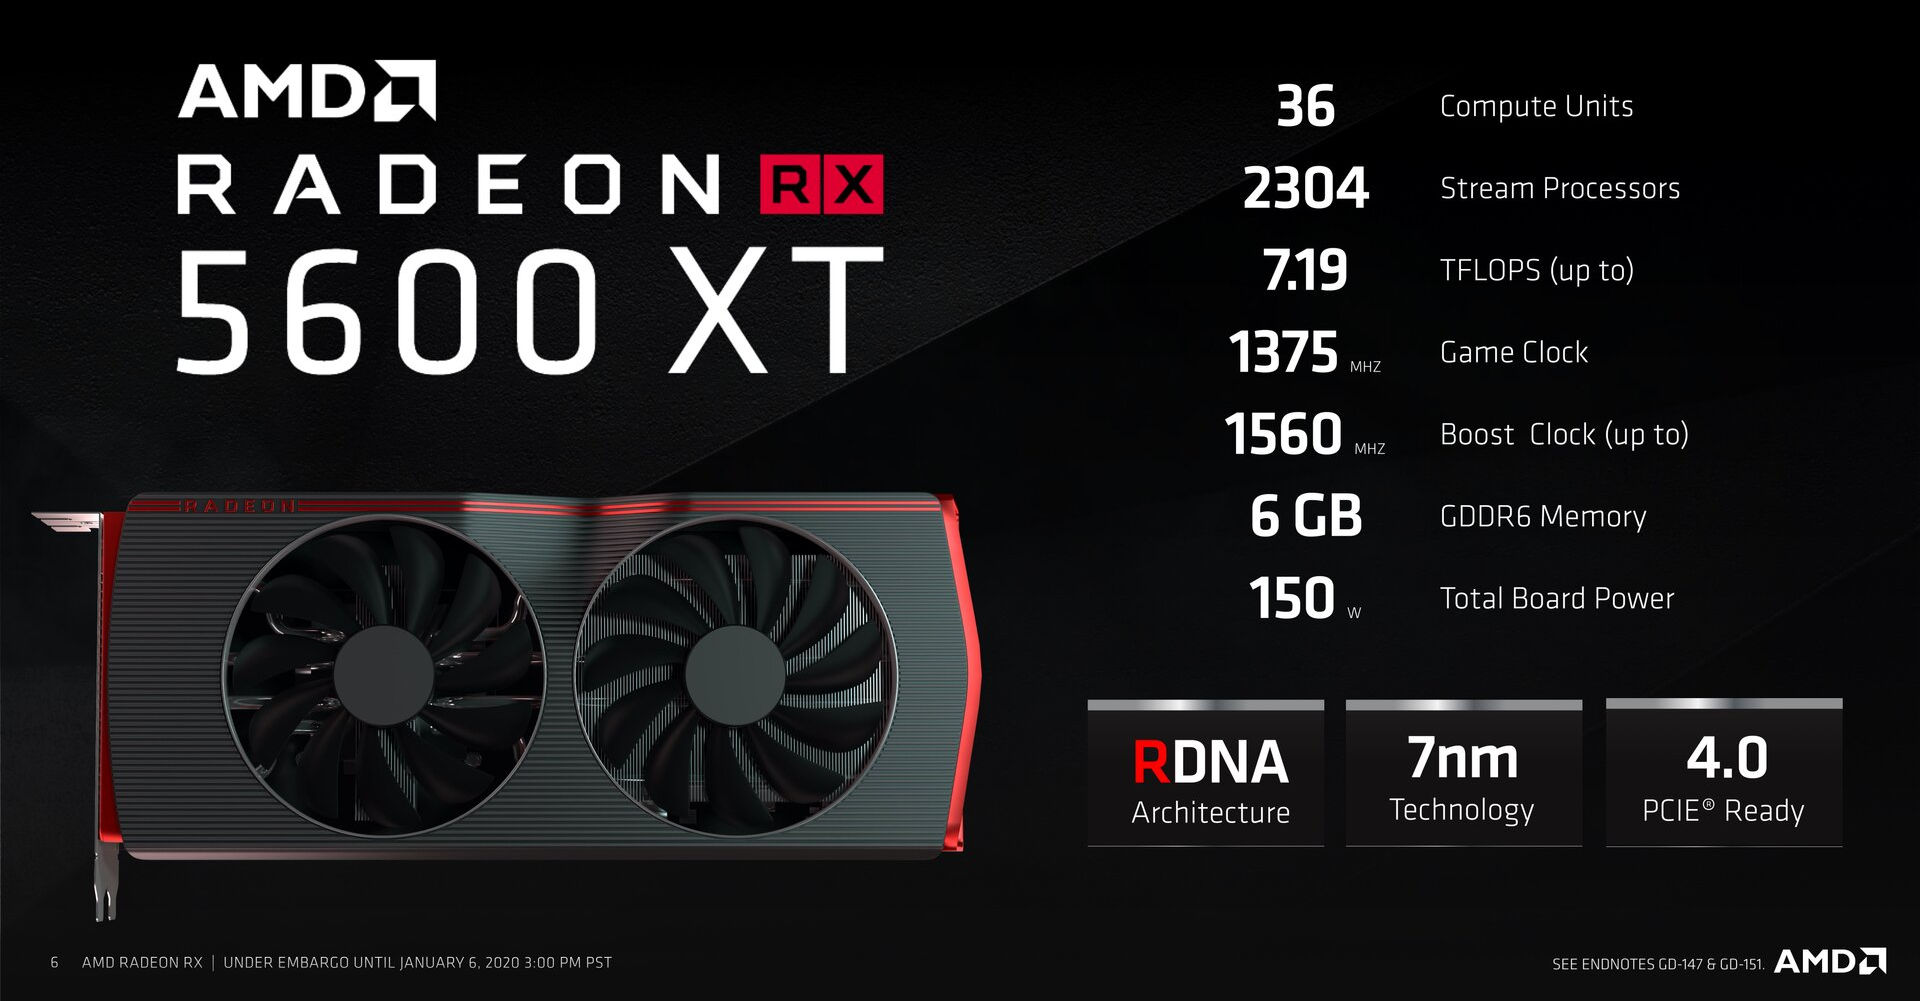 Amd Launches Radeon Rx 5600 Xt At 279 Usd Videocardz Com